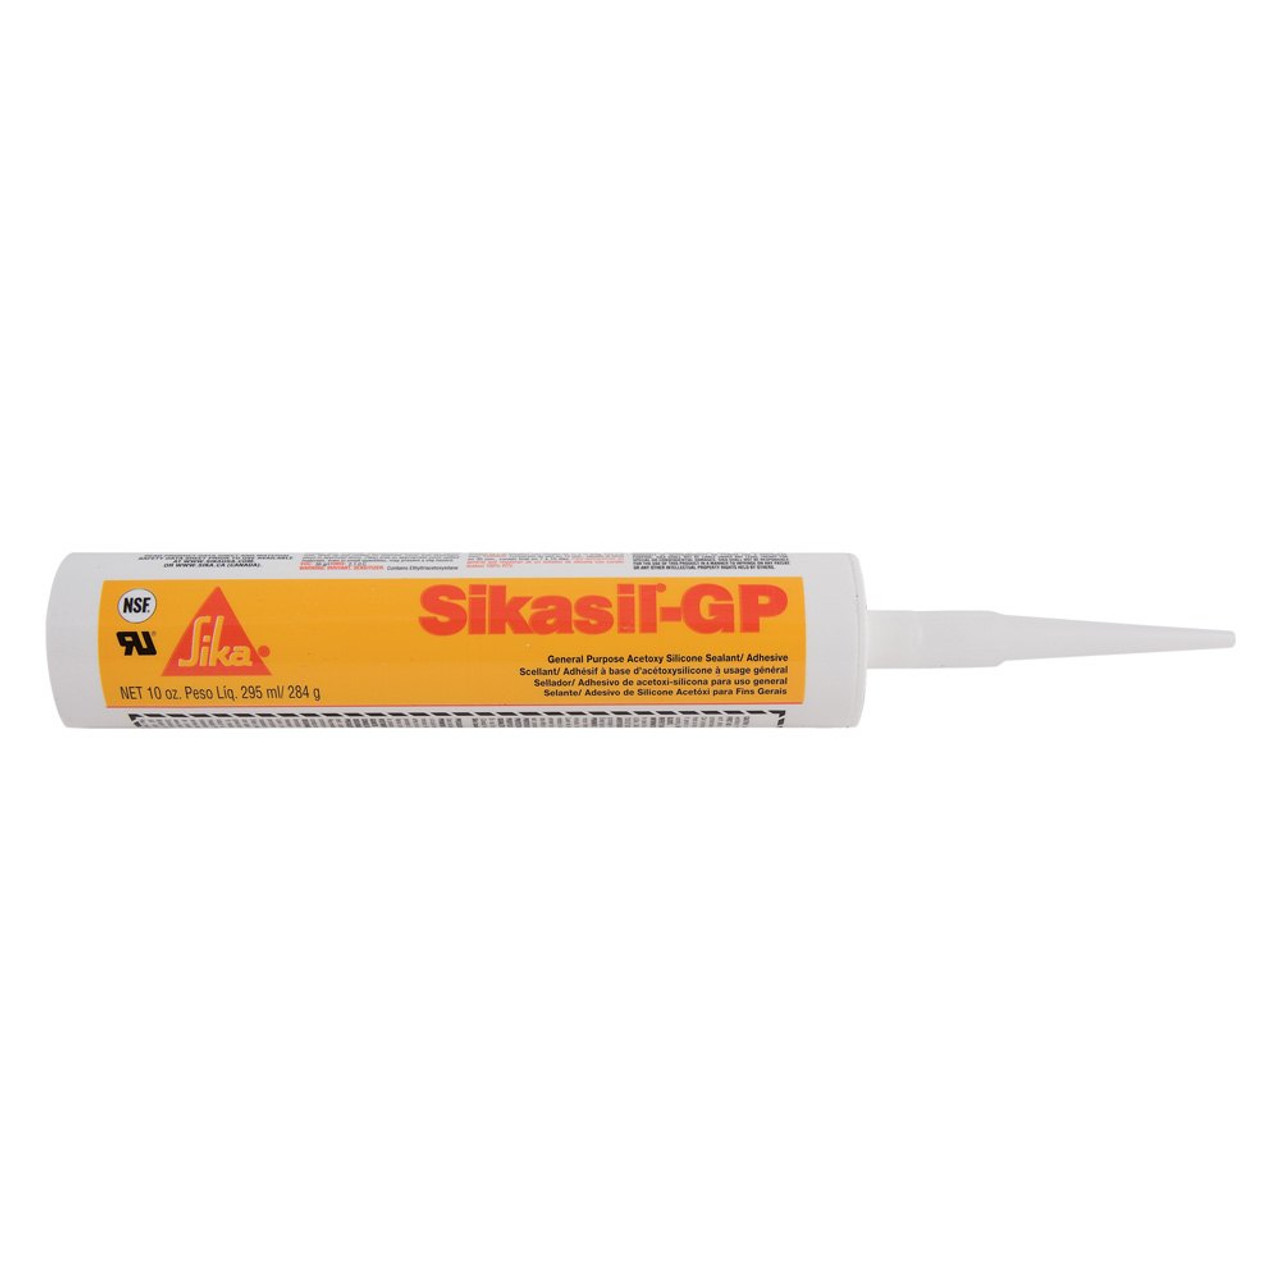 Sika Sikasil-GP Silicone Sealant Clear 295 mL Cartridge